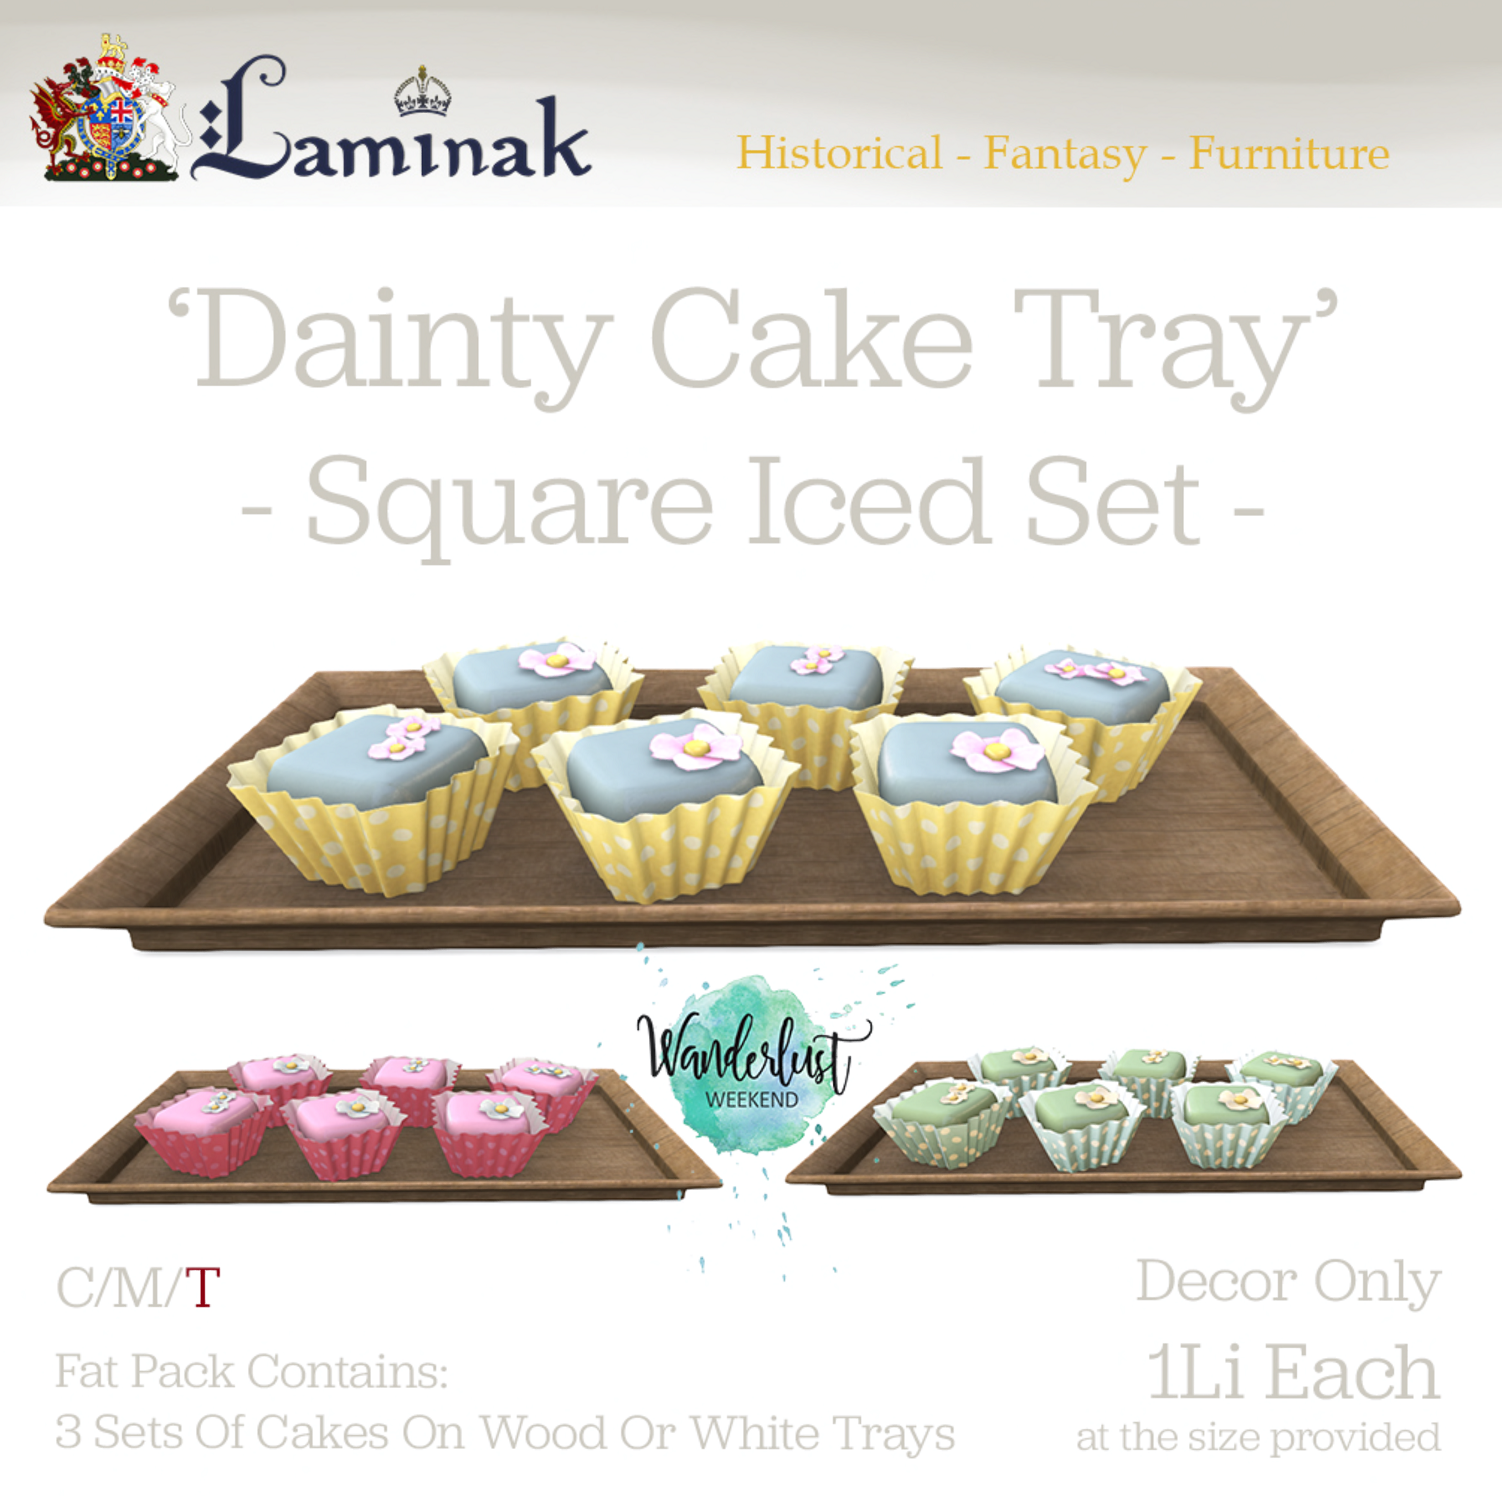 Laminak – Dainty Cake Tray (Square Iced Set)